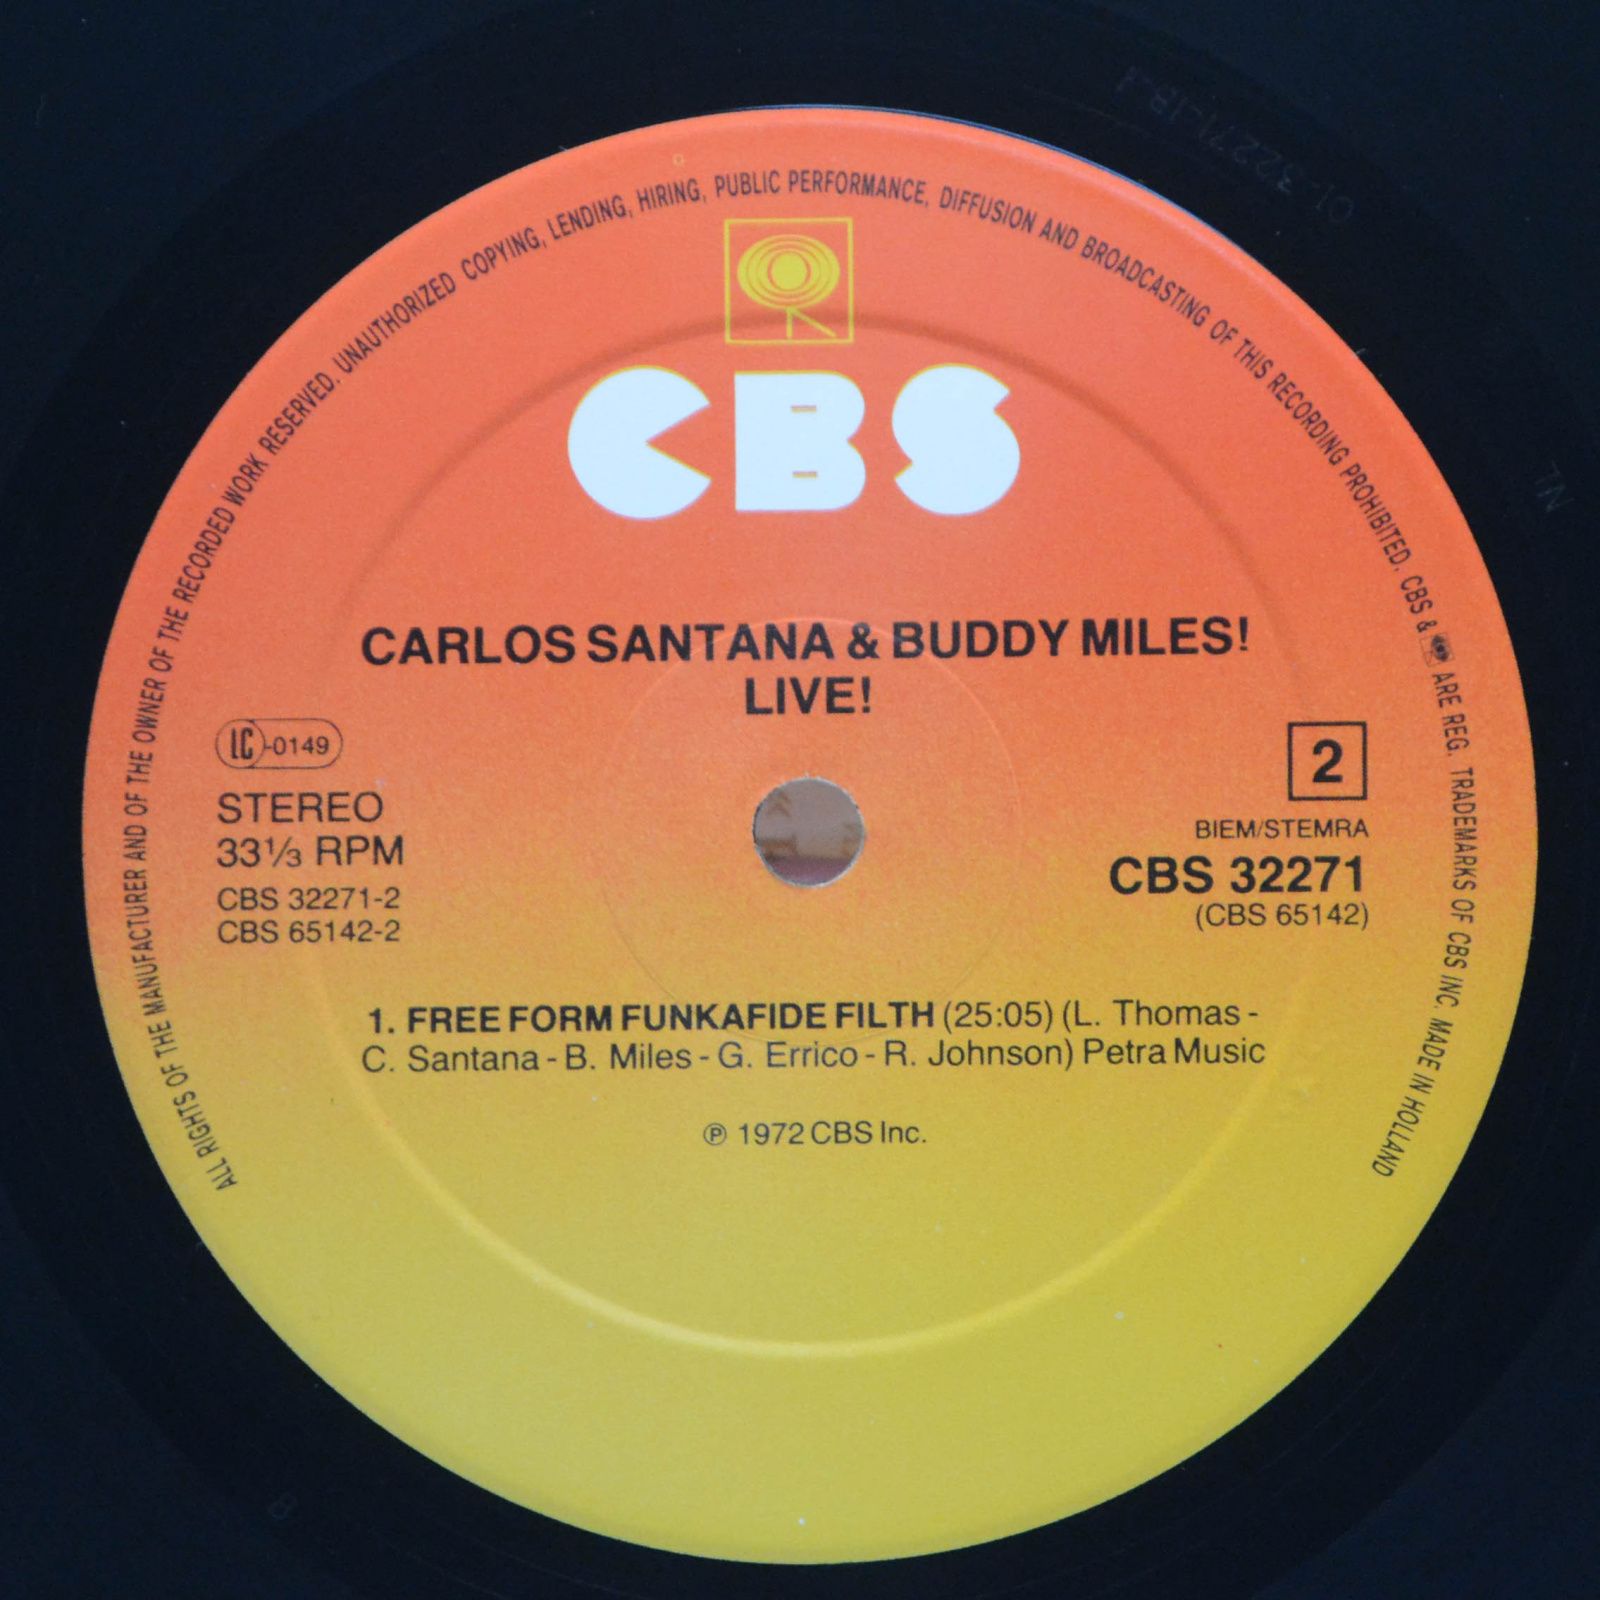 Carlos Santana & Buddy Miles — Carlos Santana & Buddy Miles! Live!, 1983